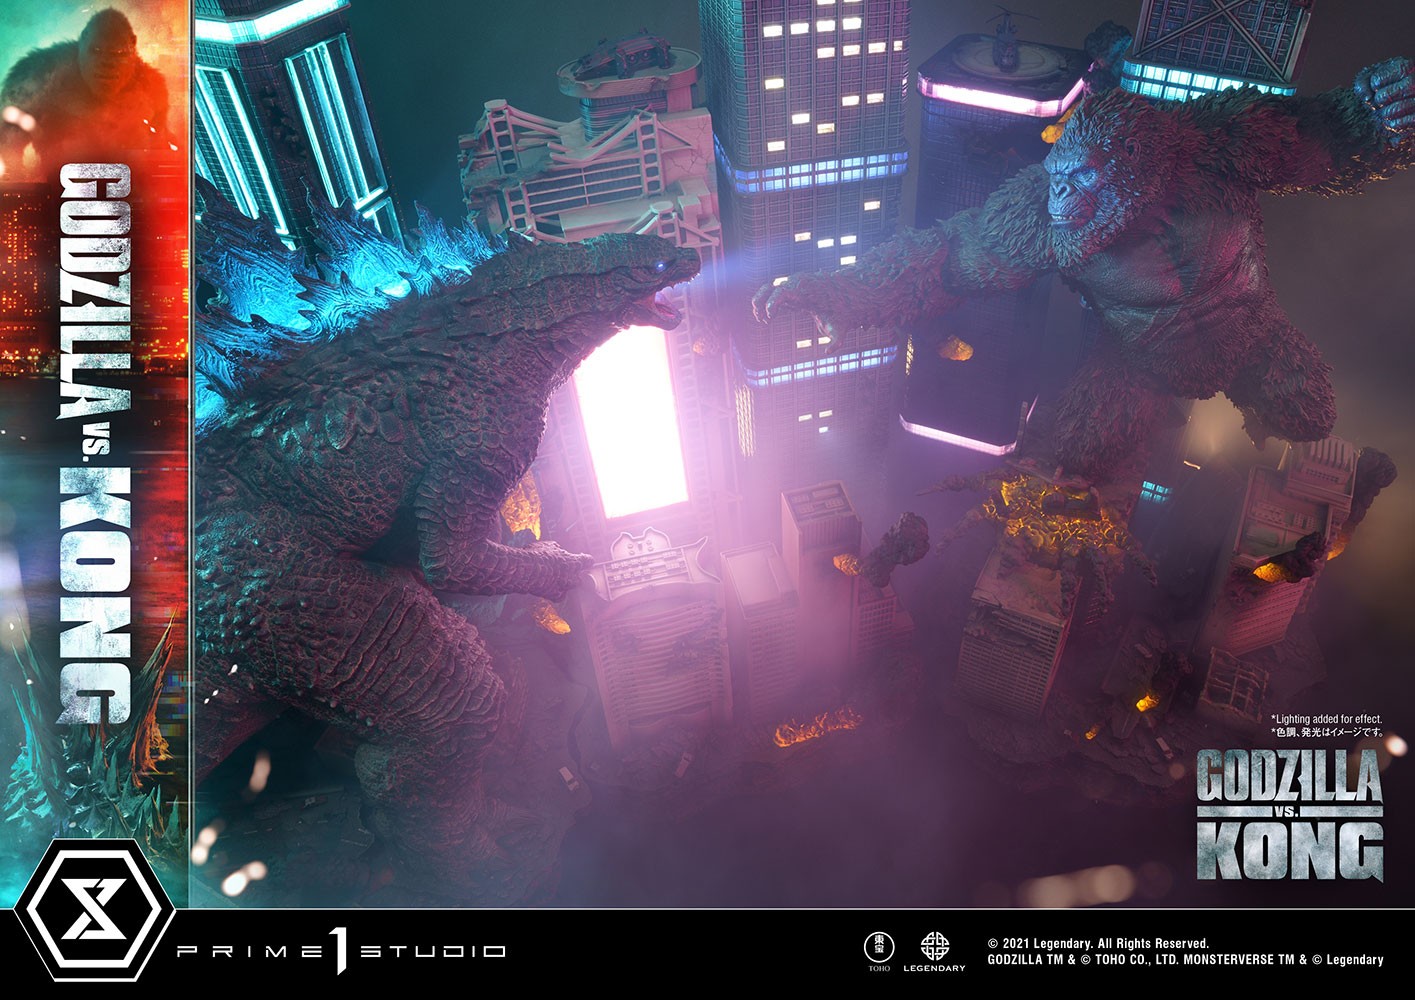 Godzilla vs Kong Final Battle (Prototype Shown) View 31